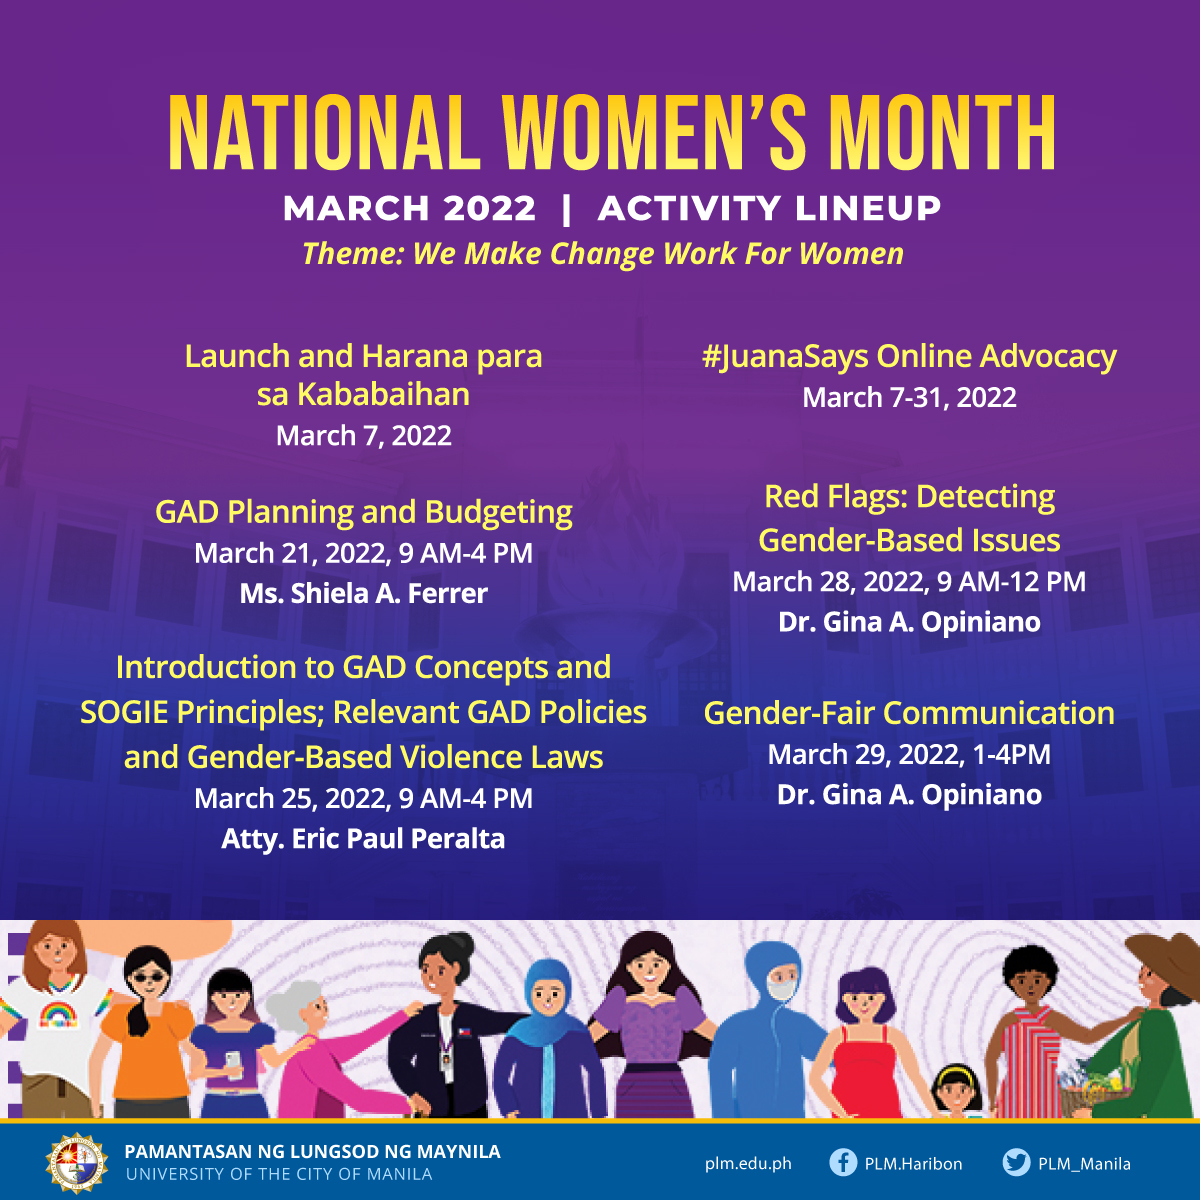 PLM joins 2022 National Women's Month Celebration